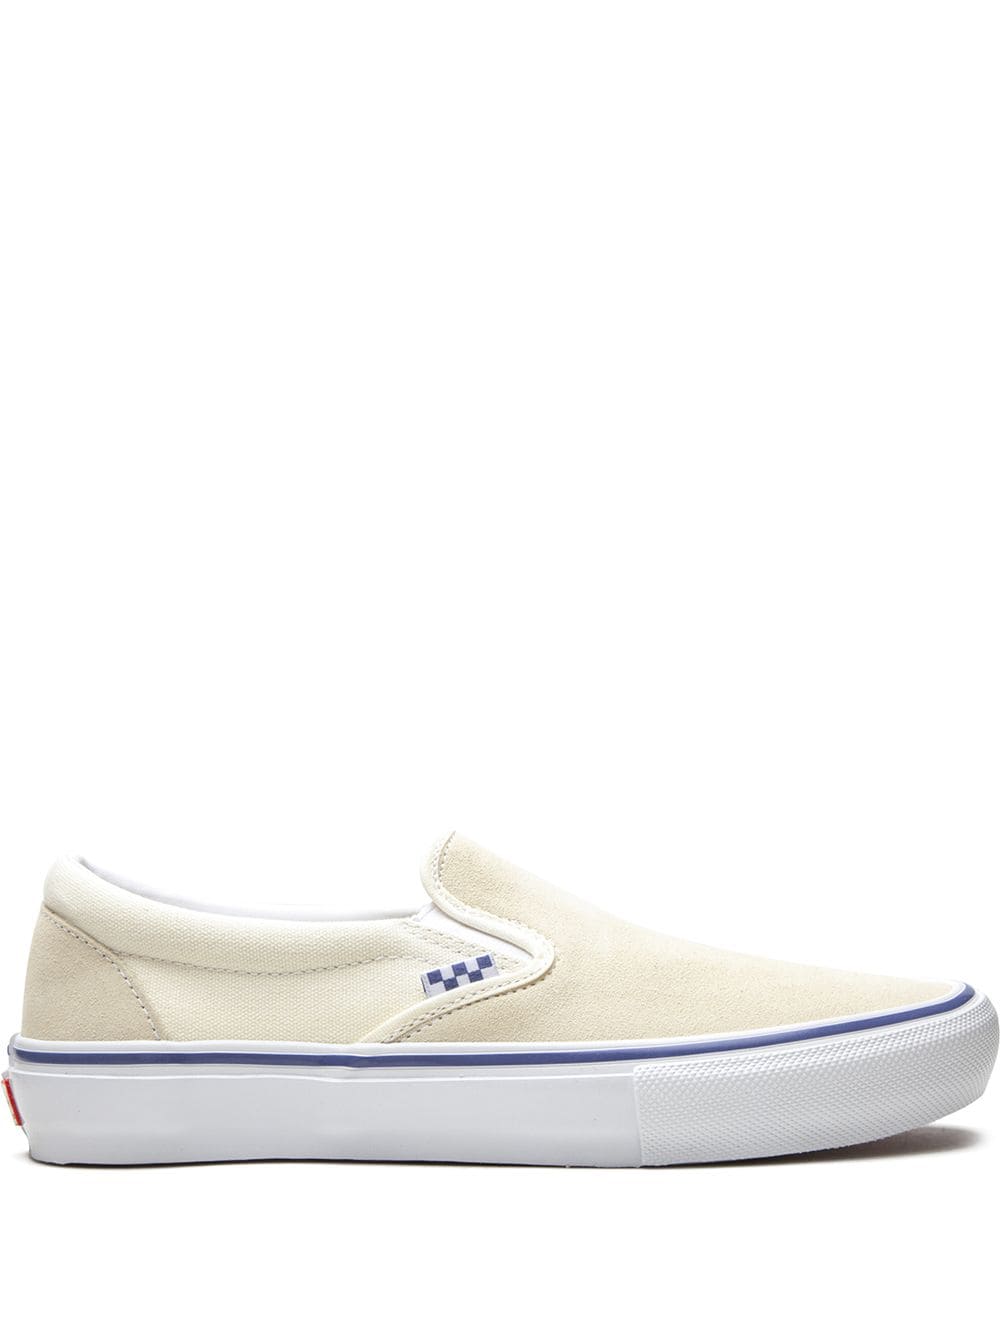 Vans Skate Slip-On sneakers - White von Vans